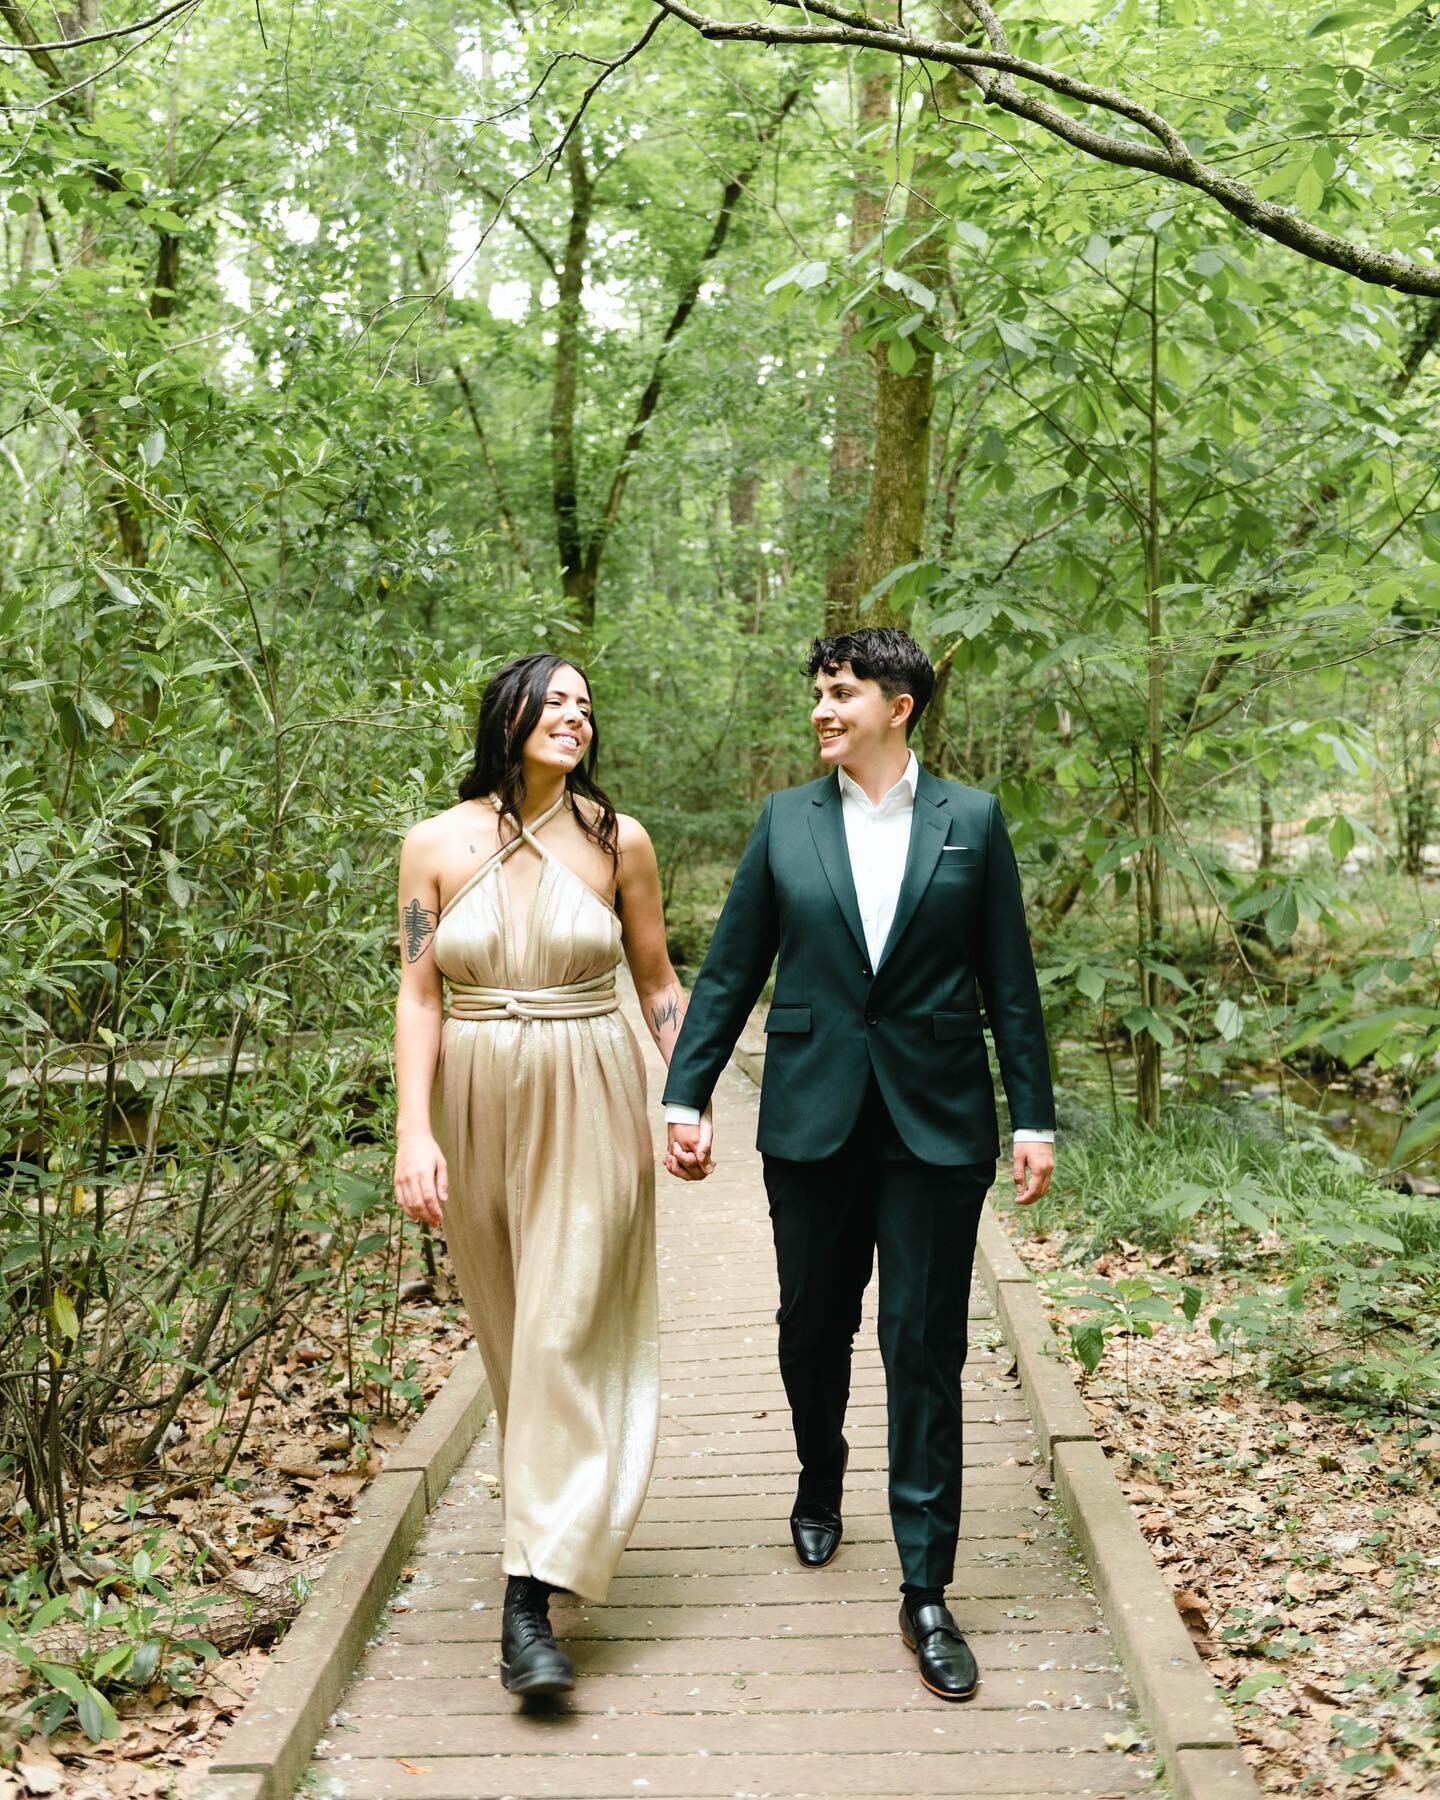 ✨Sara + Marijka✨ married in the forest at @dunwoodynaturecenter #outdoorwedding #fairywedding #atlantawedding #alternativewedding #marriedinnature